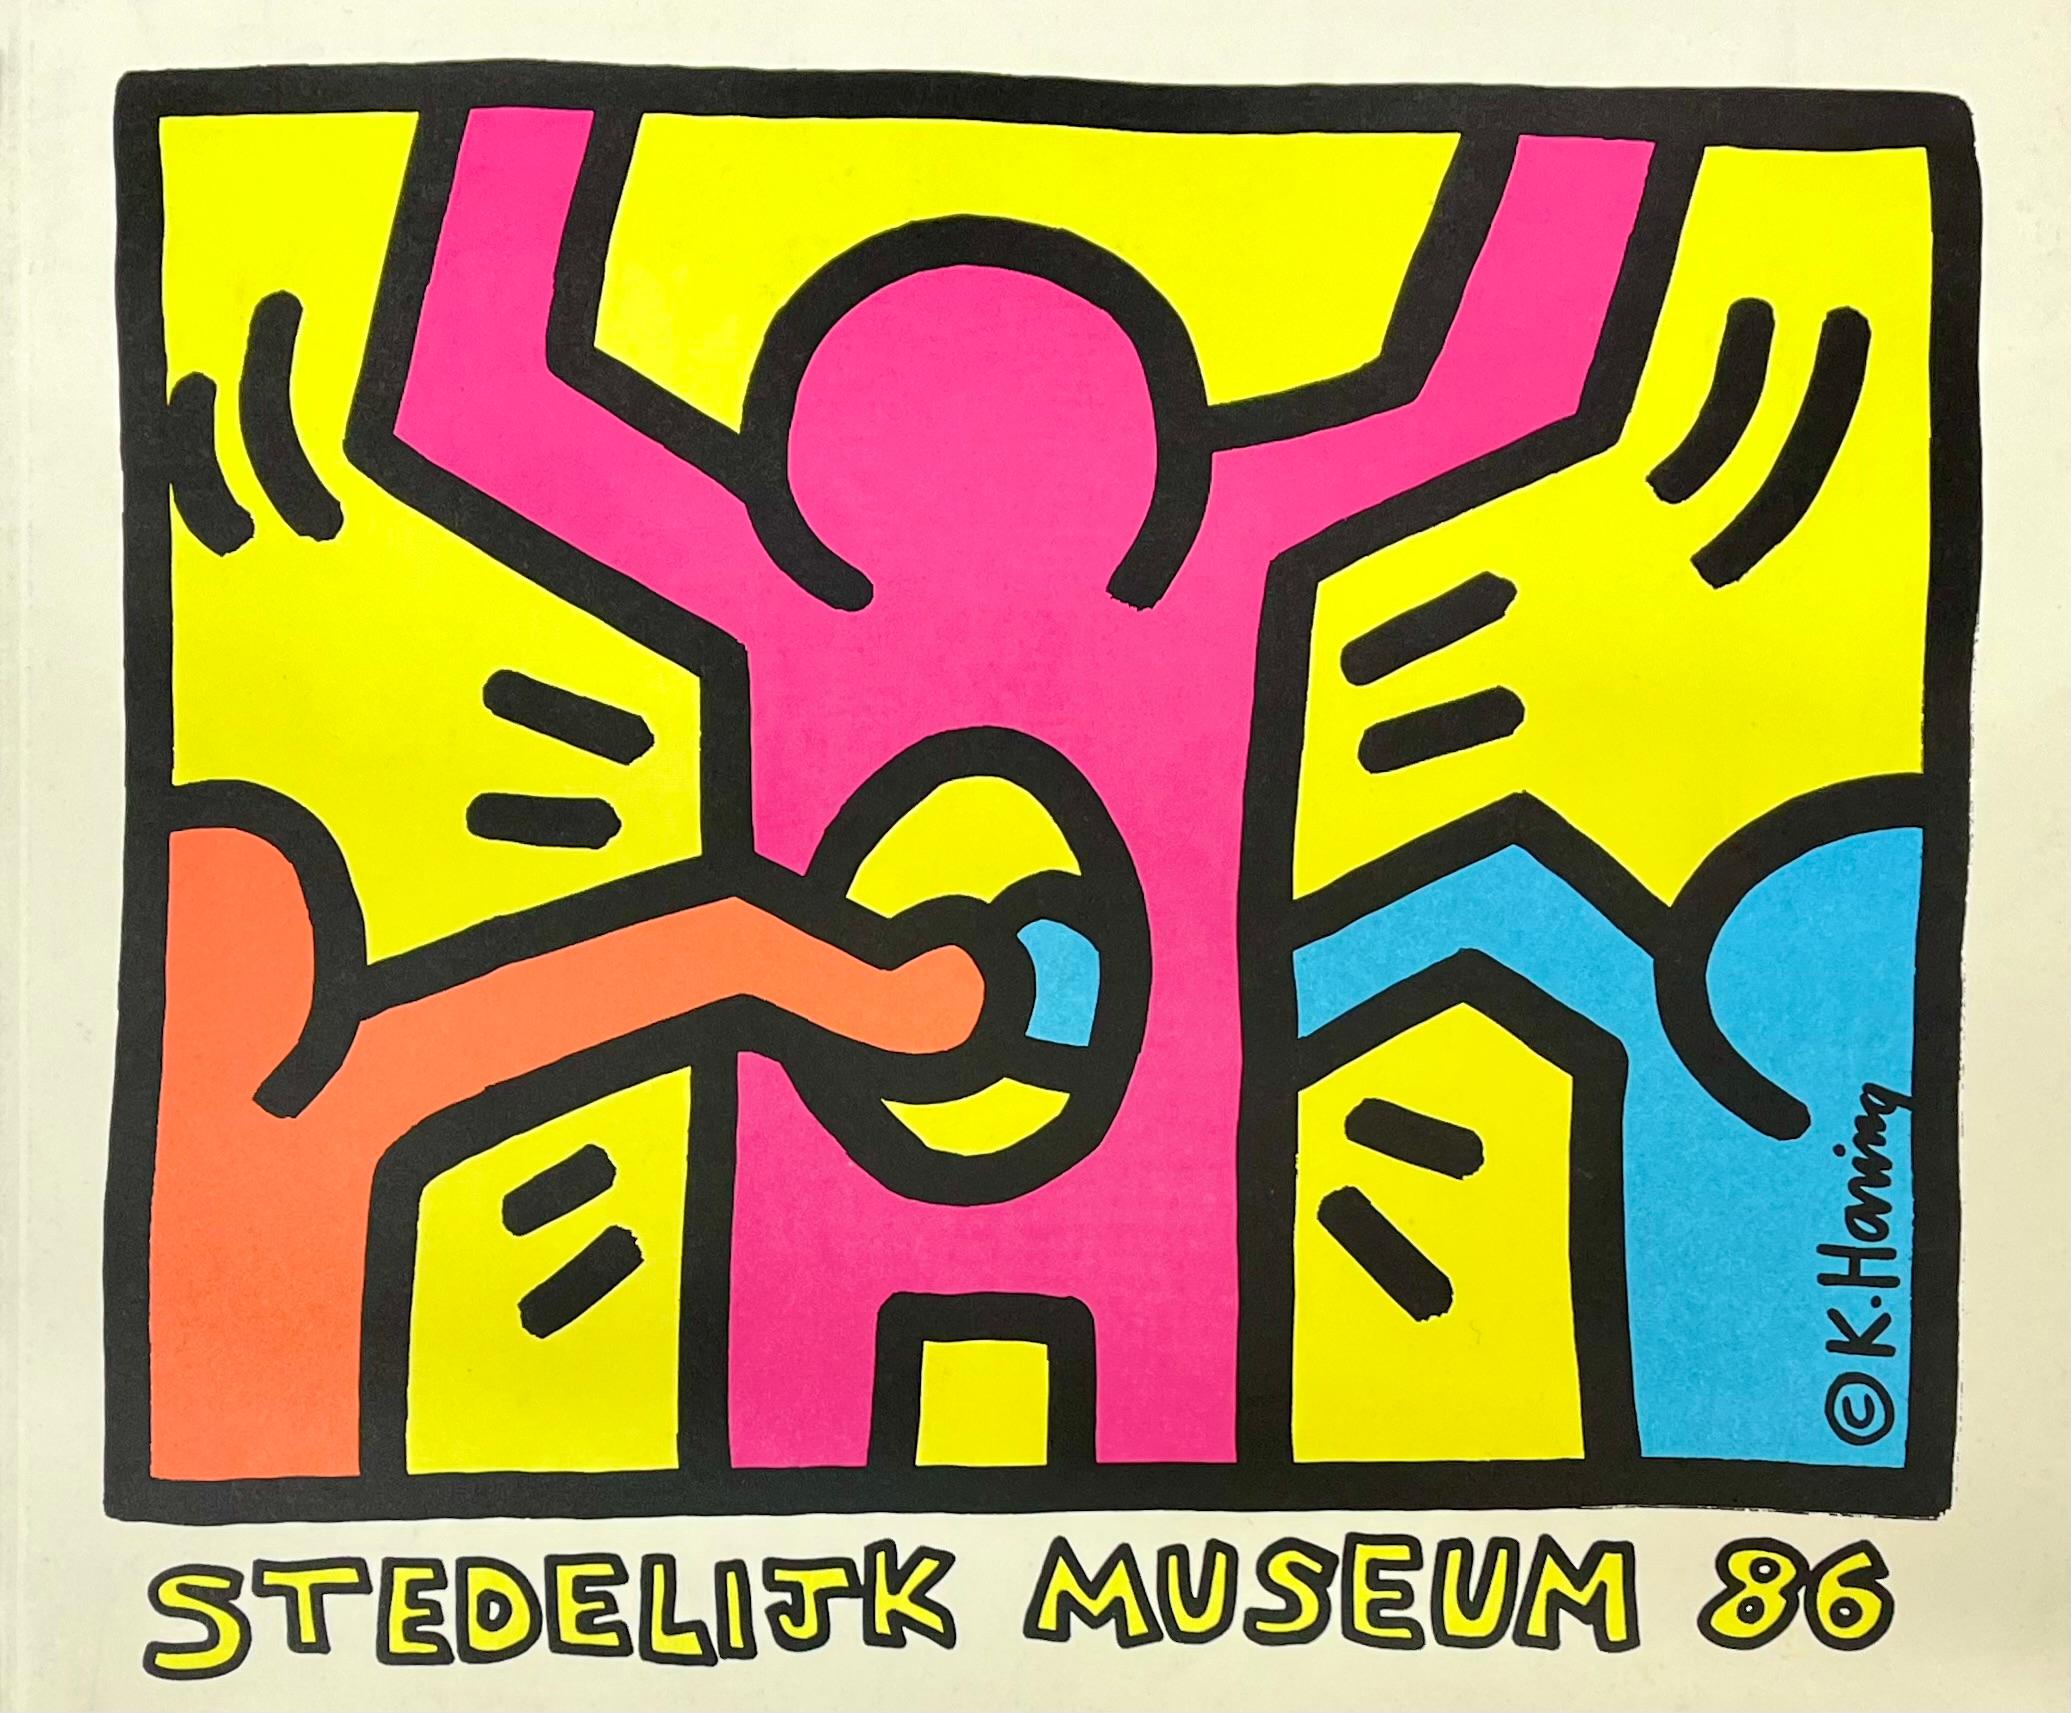 Keith Haring Stedelijk Museum 1986 (catalogue de l'exposition Keith Haring 1986)